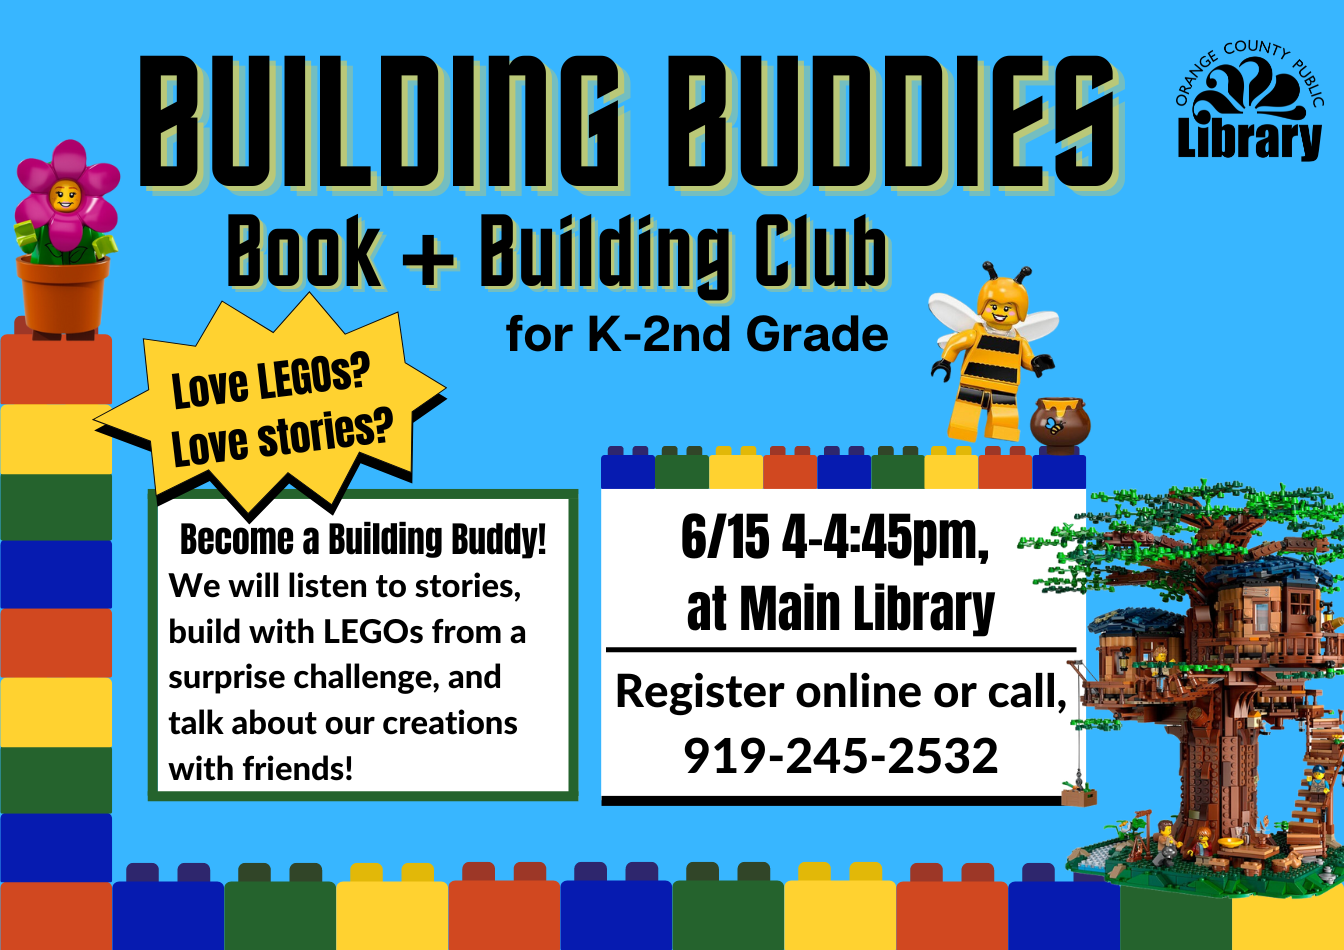 Building Buddies program for K-2 on June 15 at 4:00PM